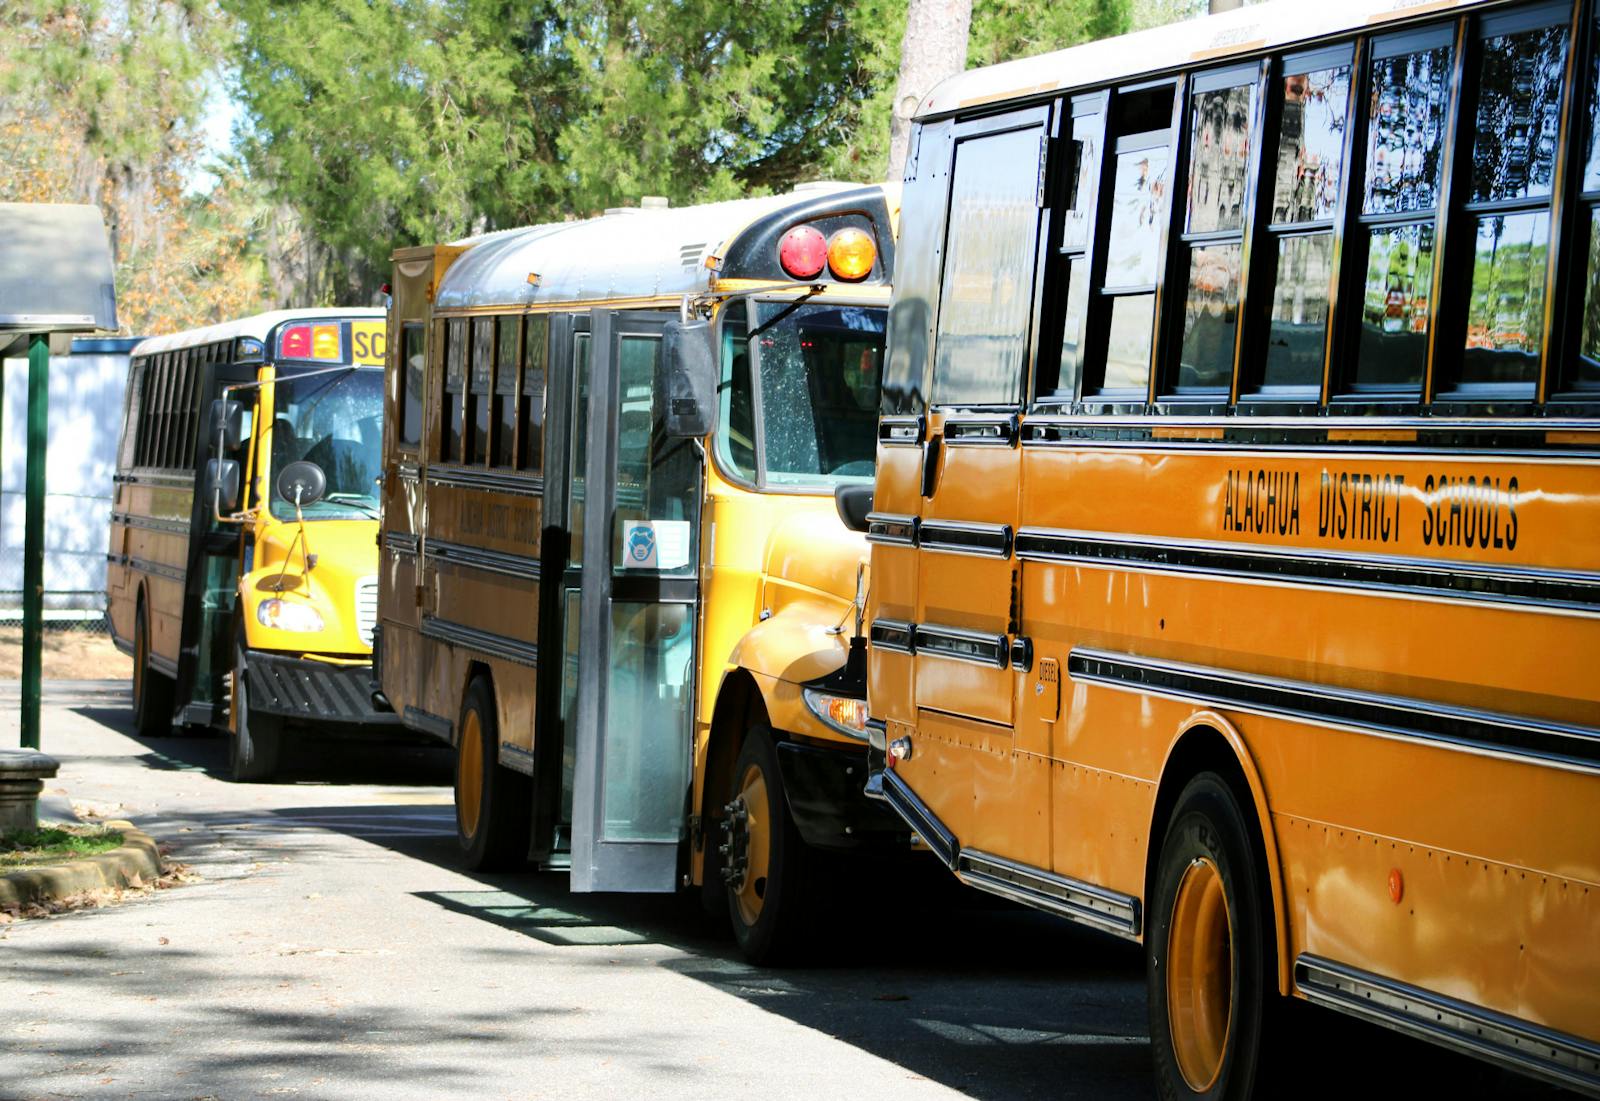 Alachua County Public School parents are unhappy as bus route delays